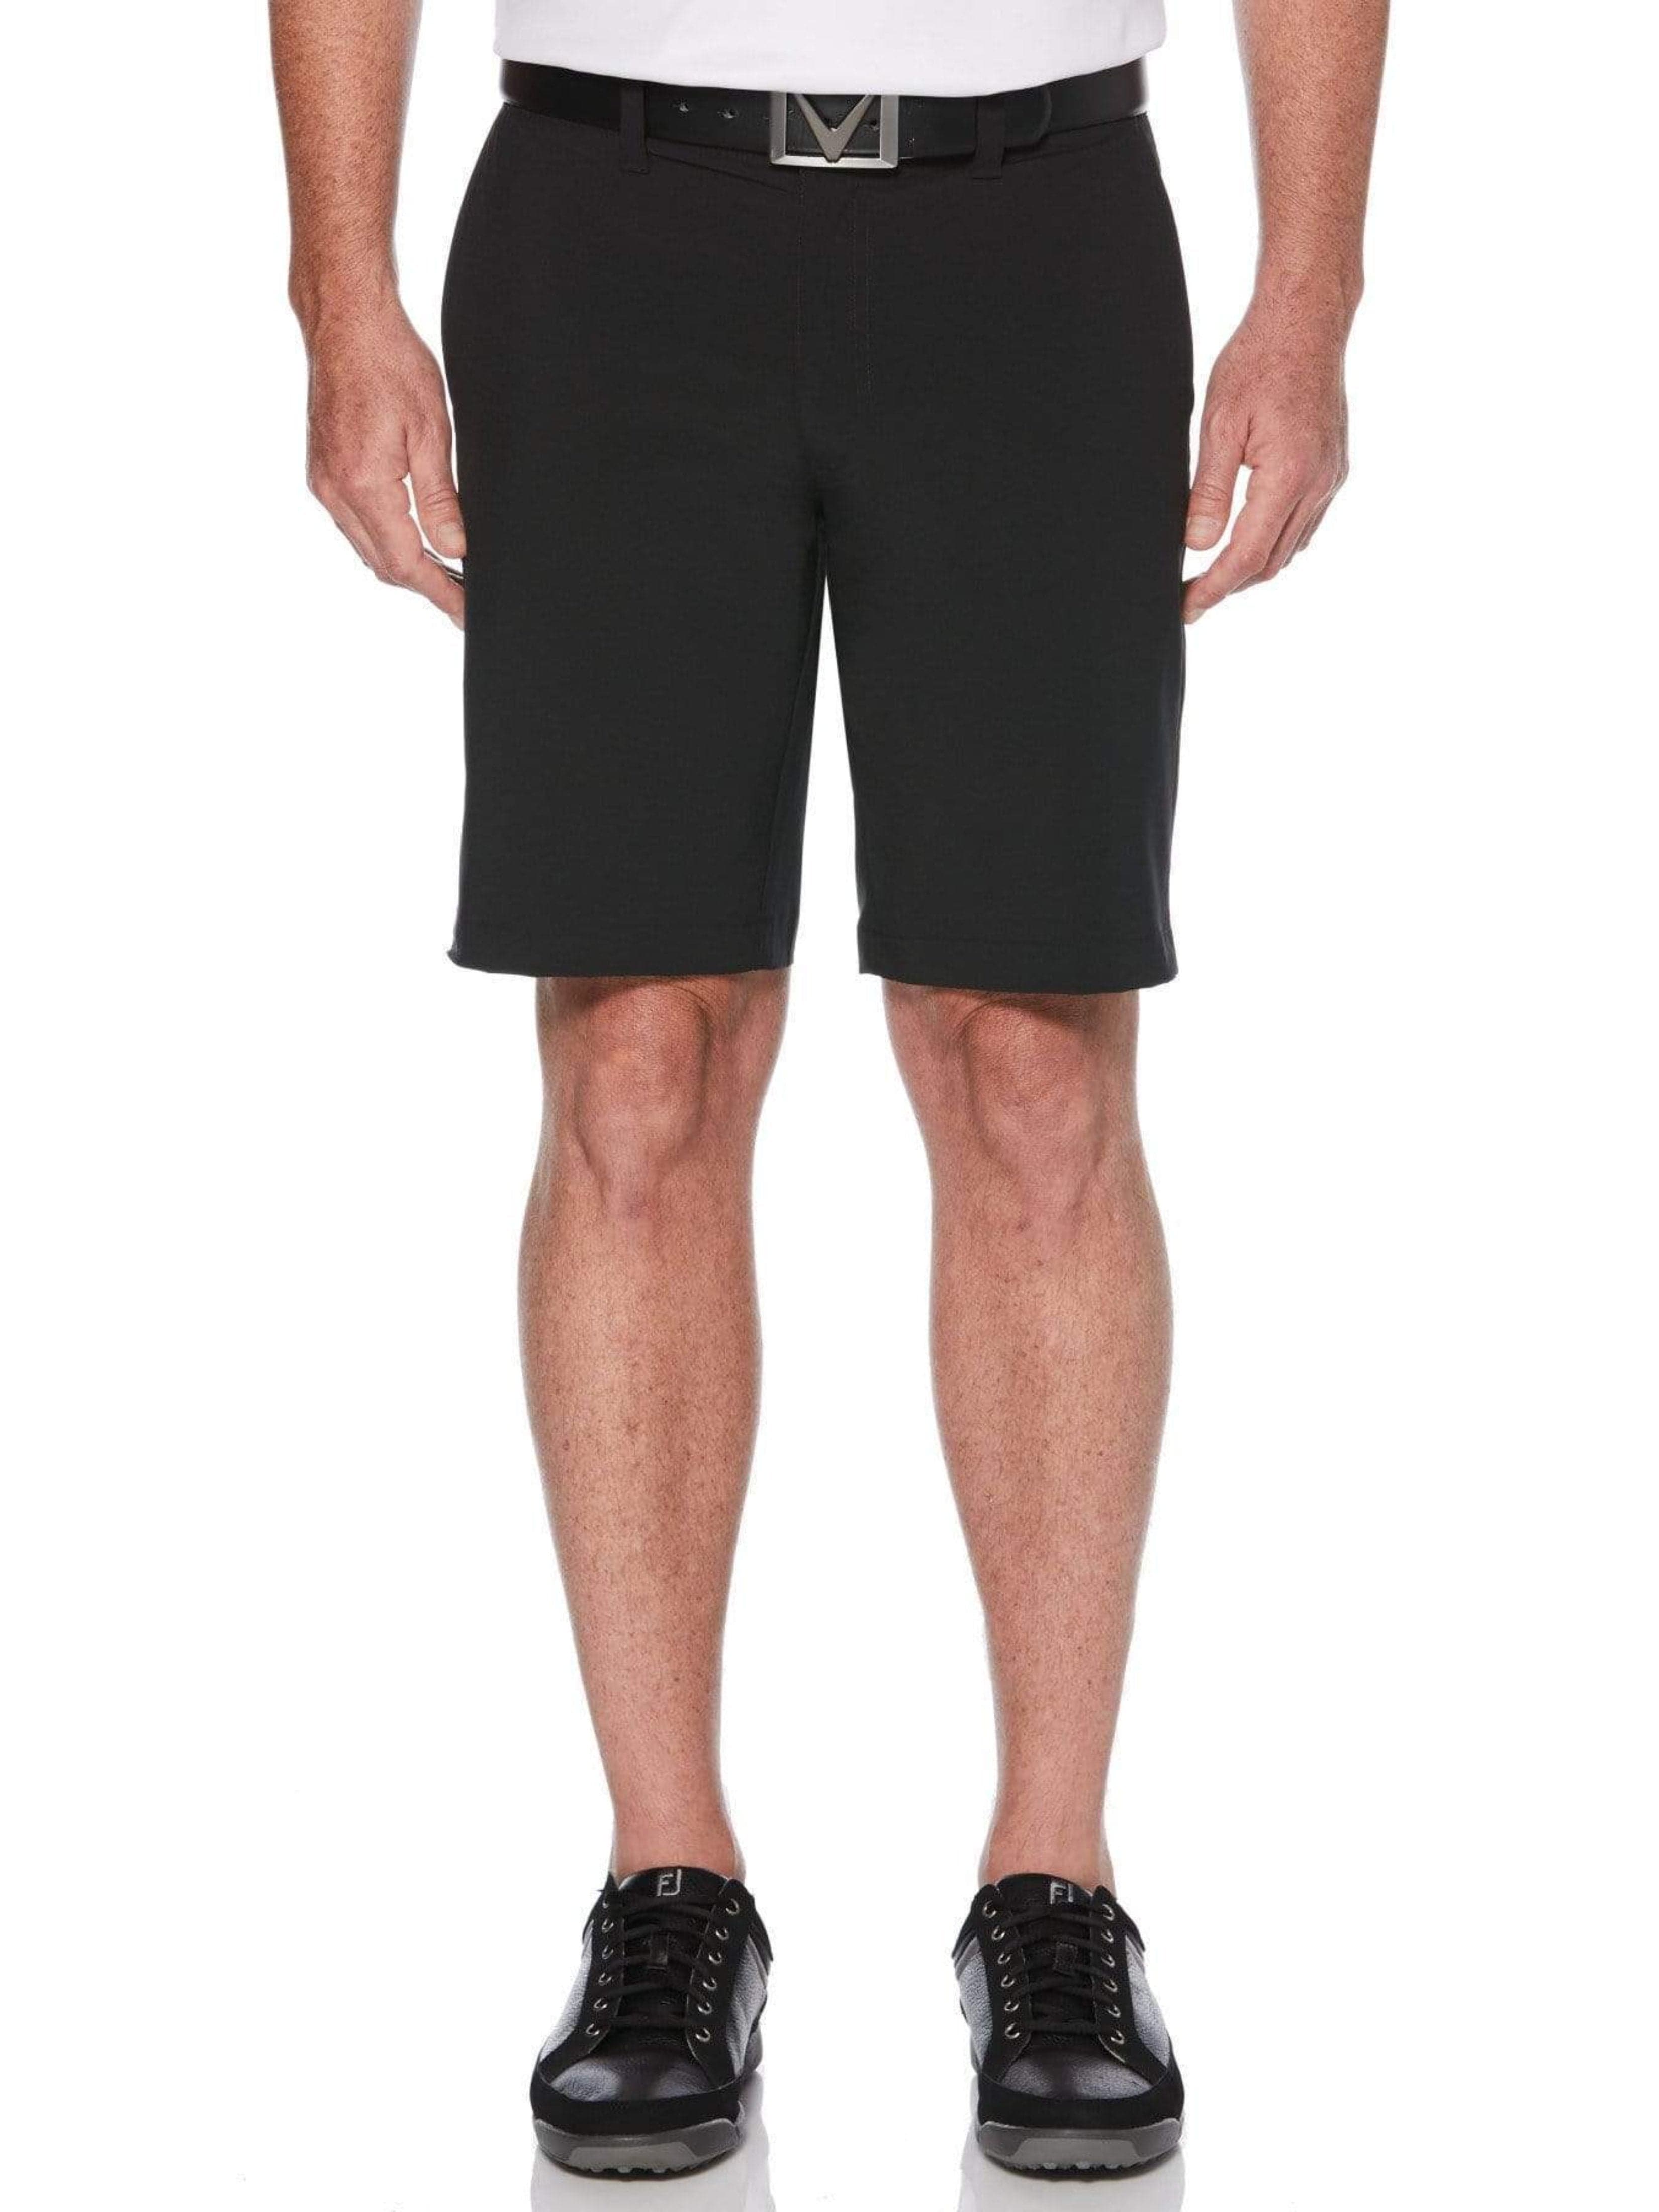 Callaway Apparel Mens Big & Tall Stretch Shorts, Size 42B, Black, Polyester/Spandex | Golf Apparel Shop